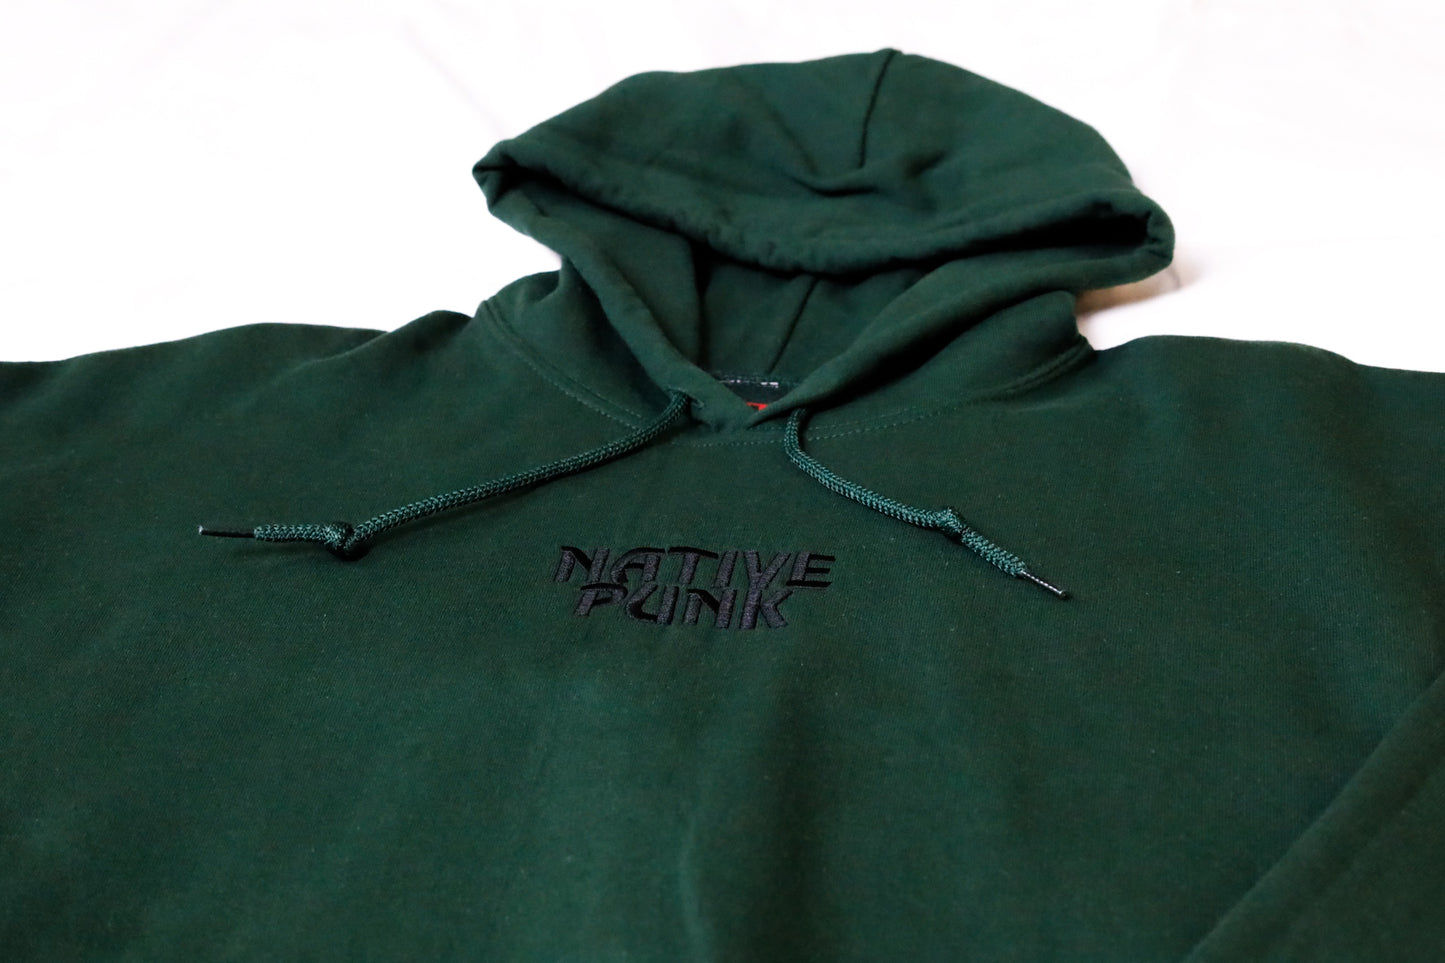 NATIVE PUNK - standard green hoodie